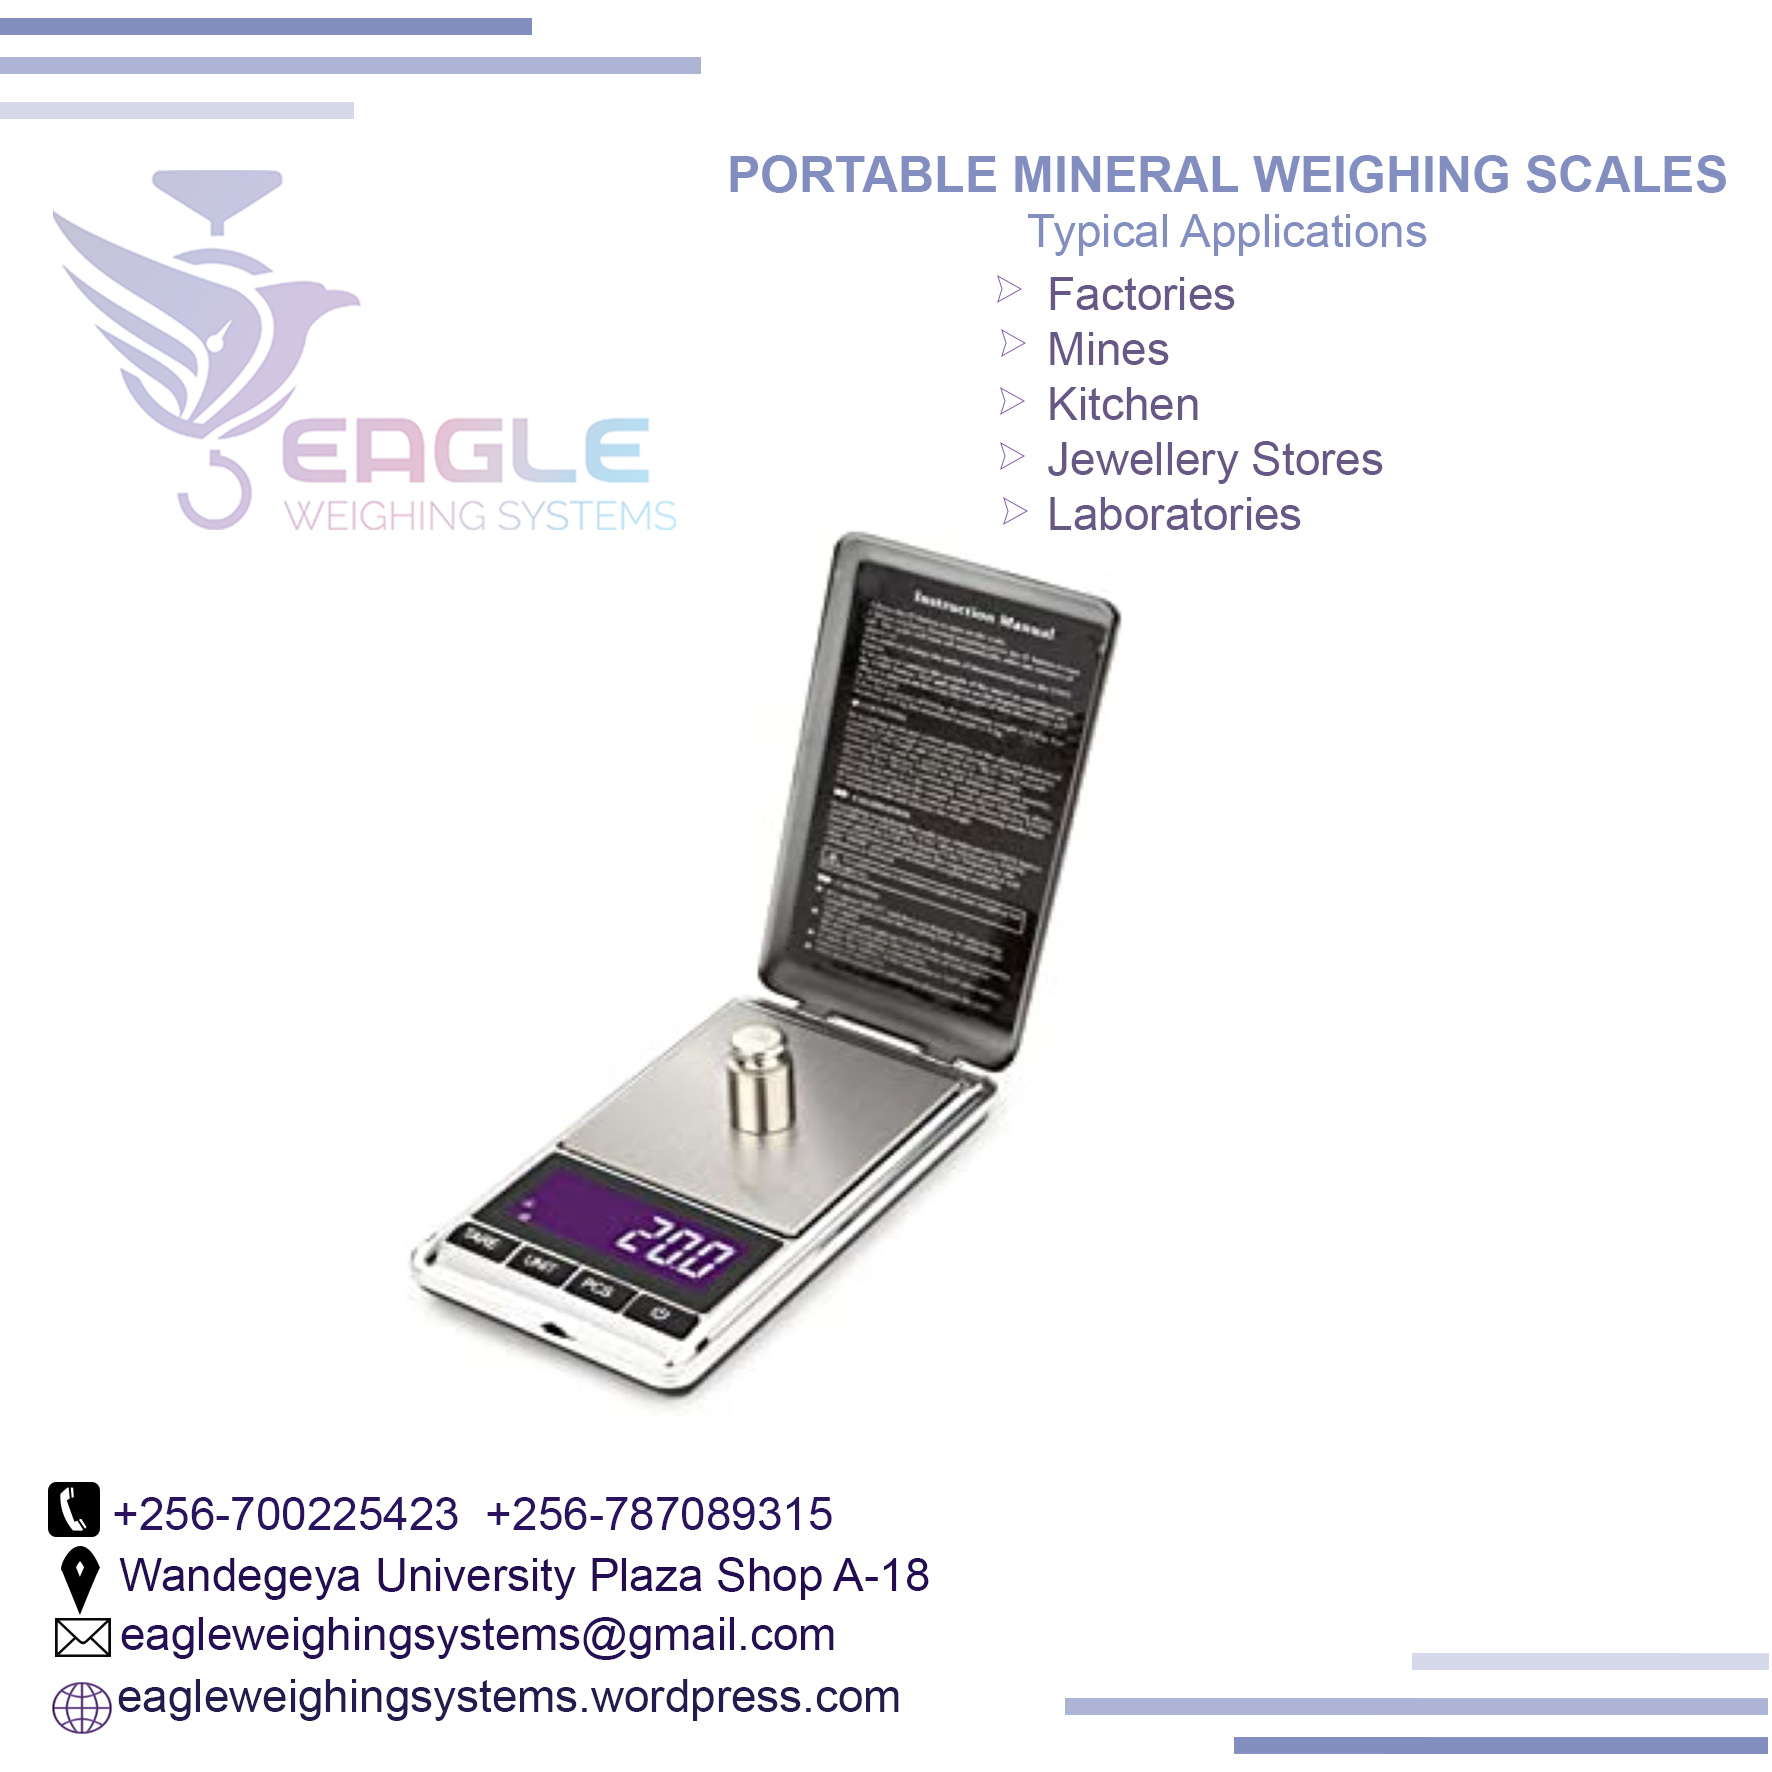 Digital Portable Portable mineral, jewelry Scales in Kampala Uganda, Kampala Central Division, Central, Uganda